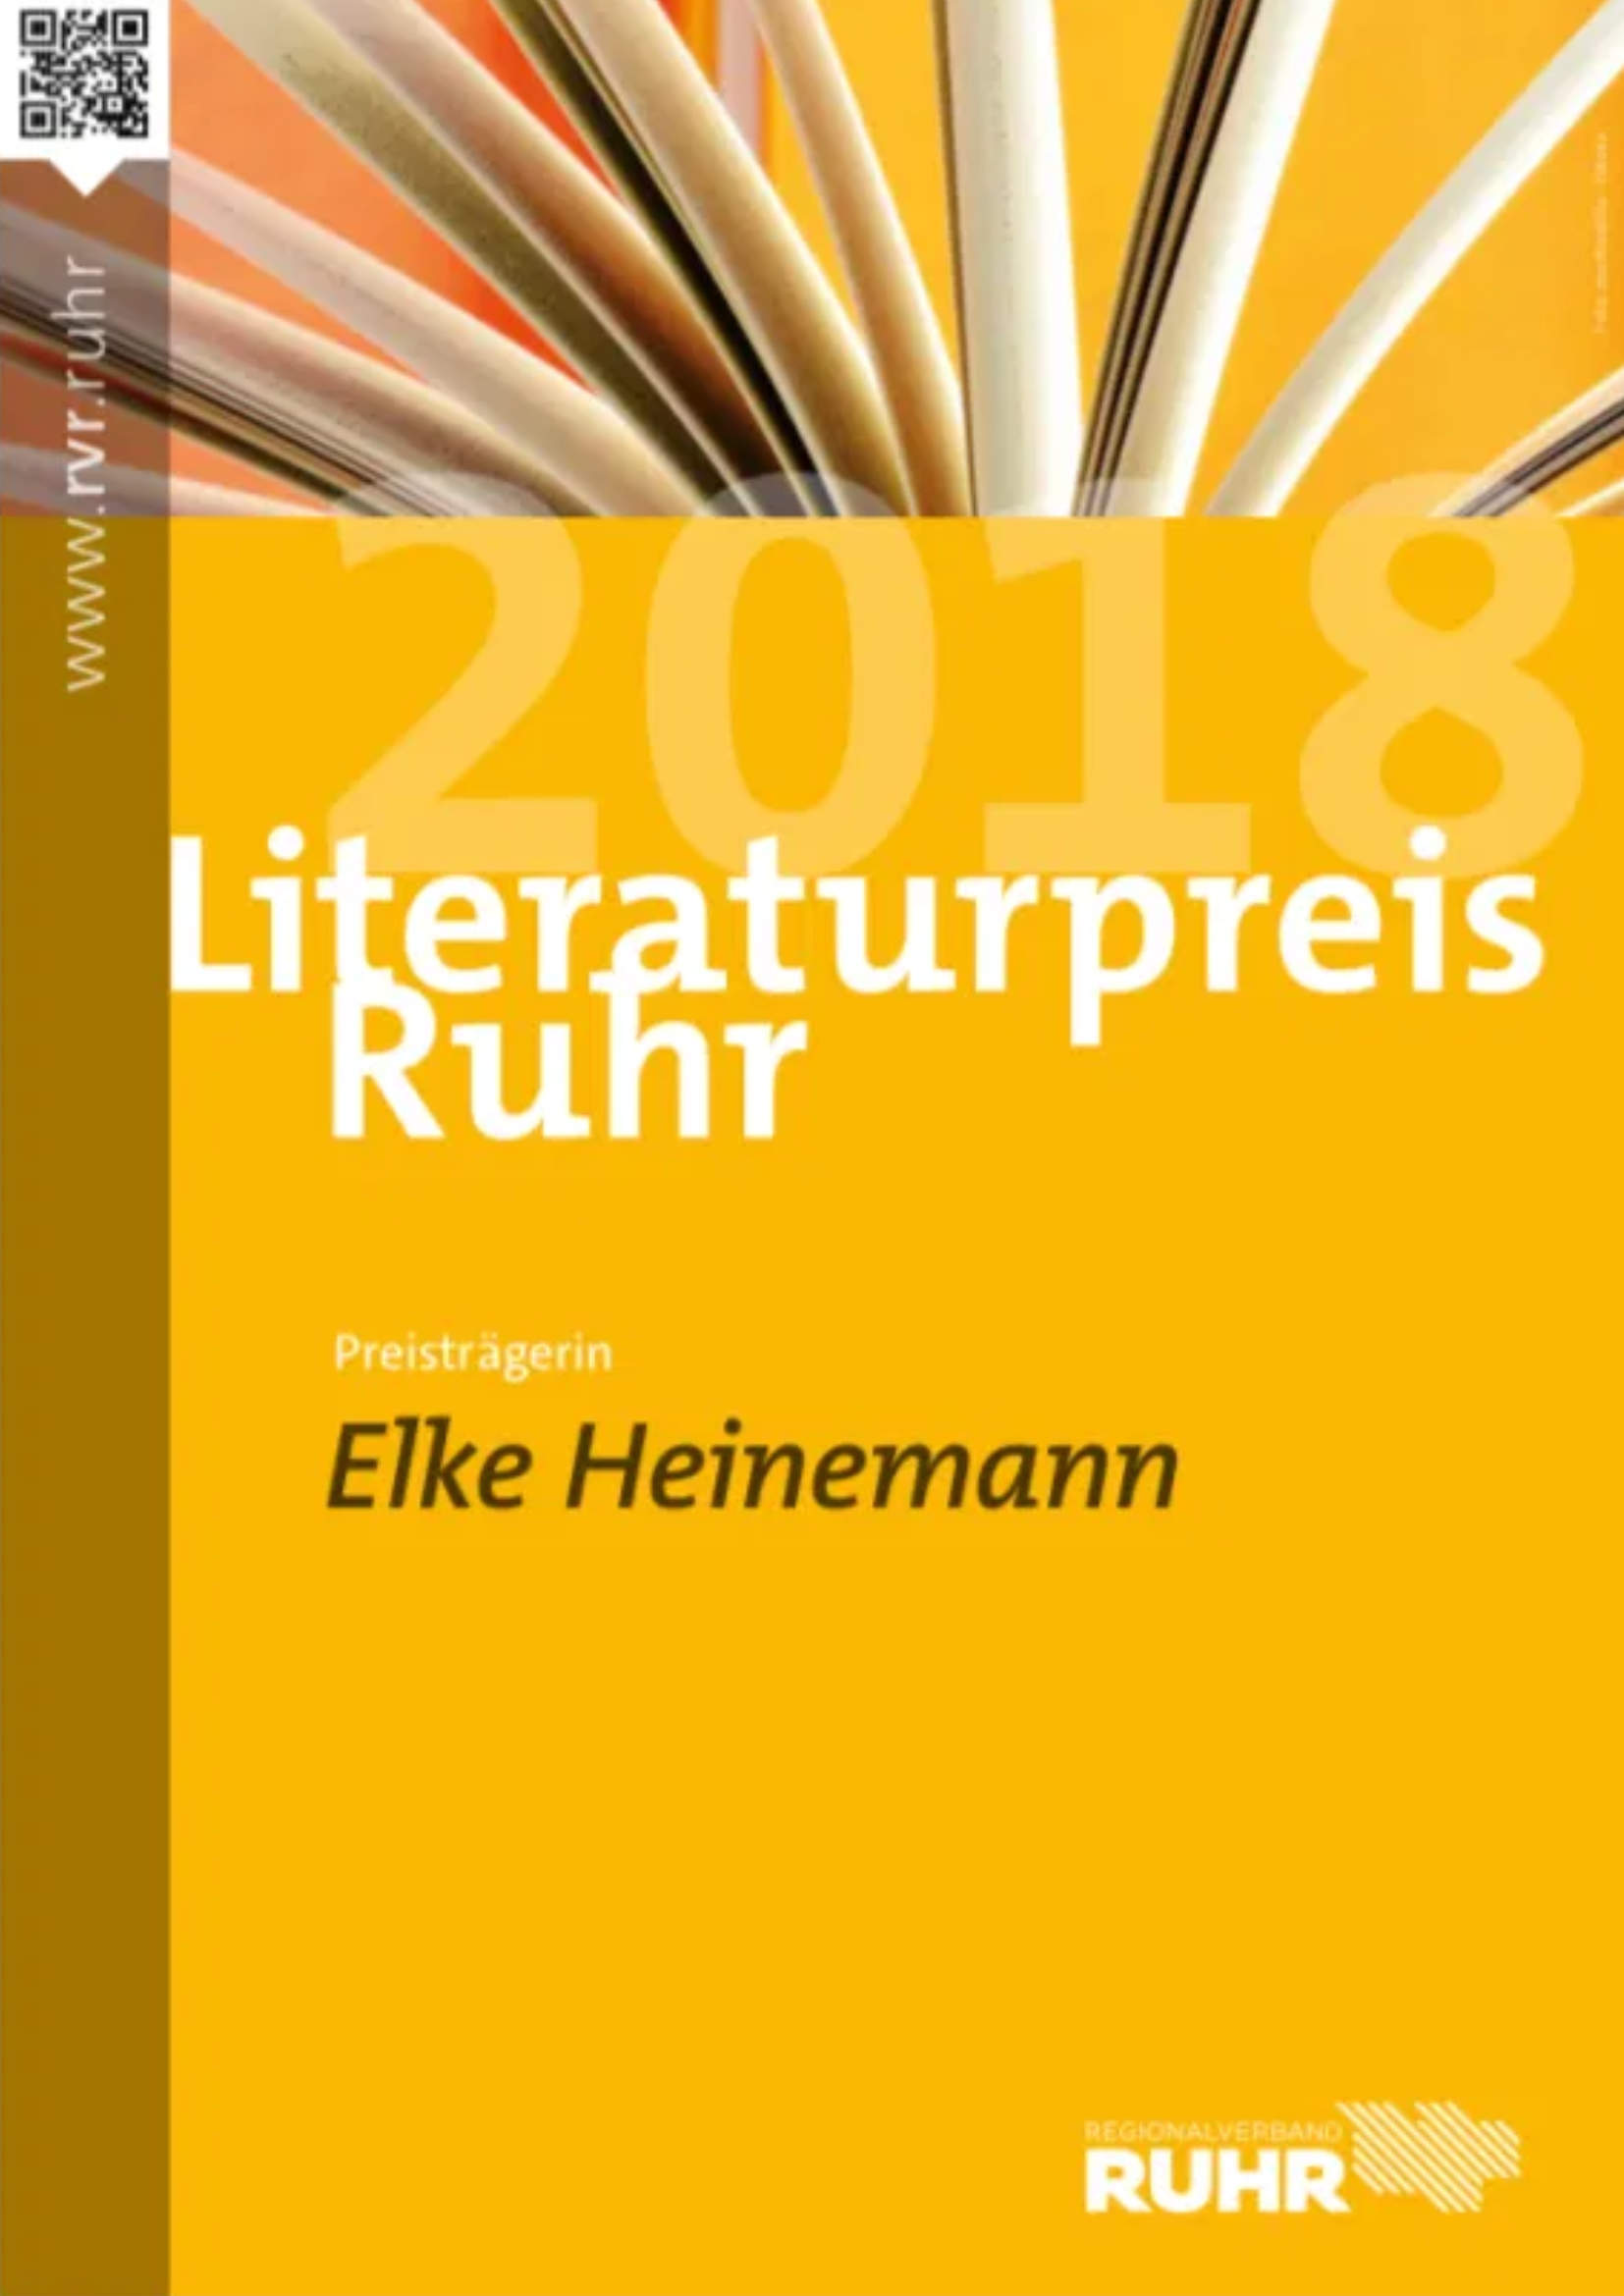 Literaturpreis Ruhr 2018